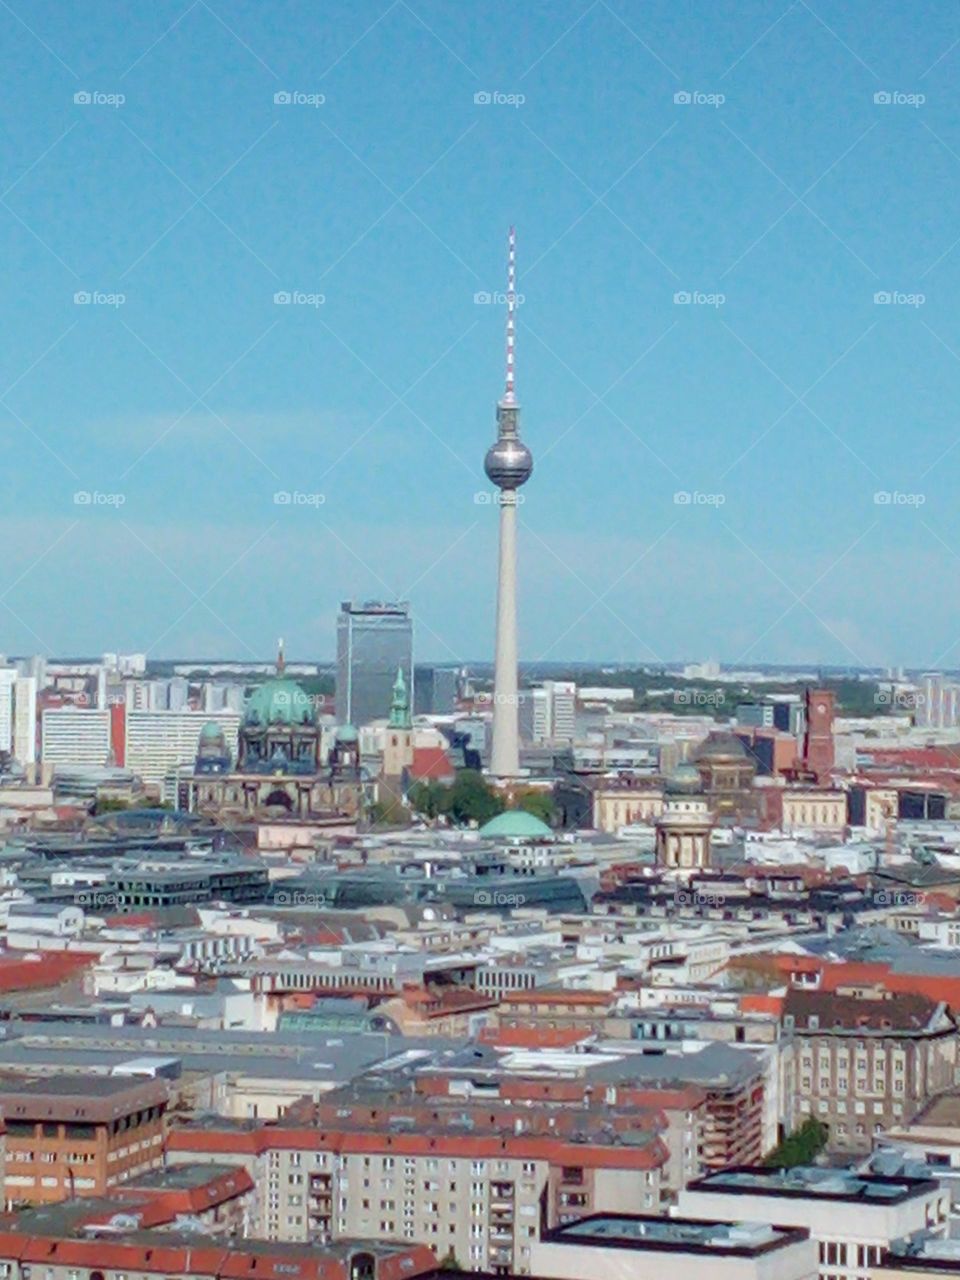 Berlin skyline with Alexanderplatz Tv tower